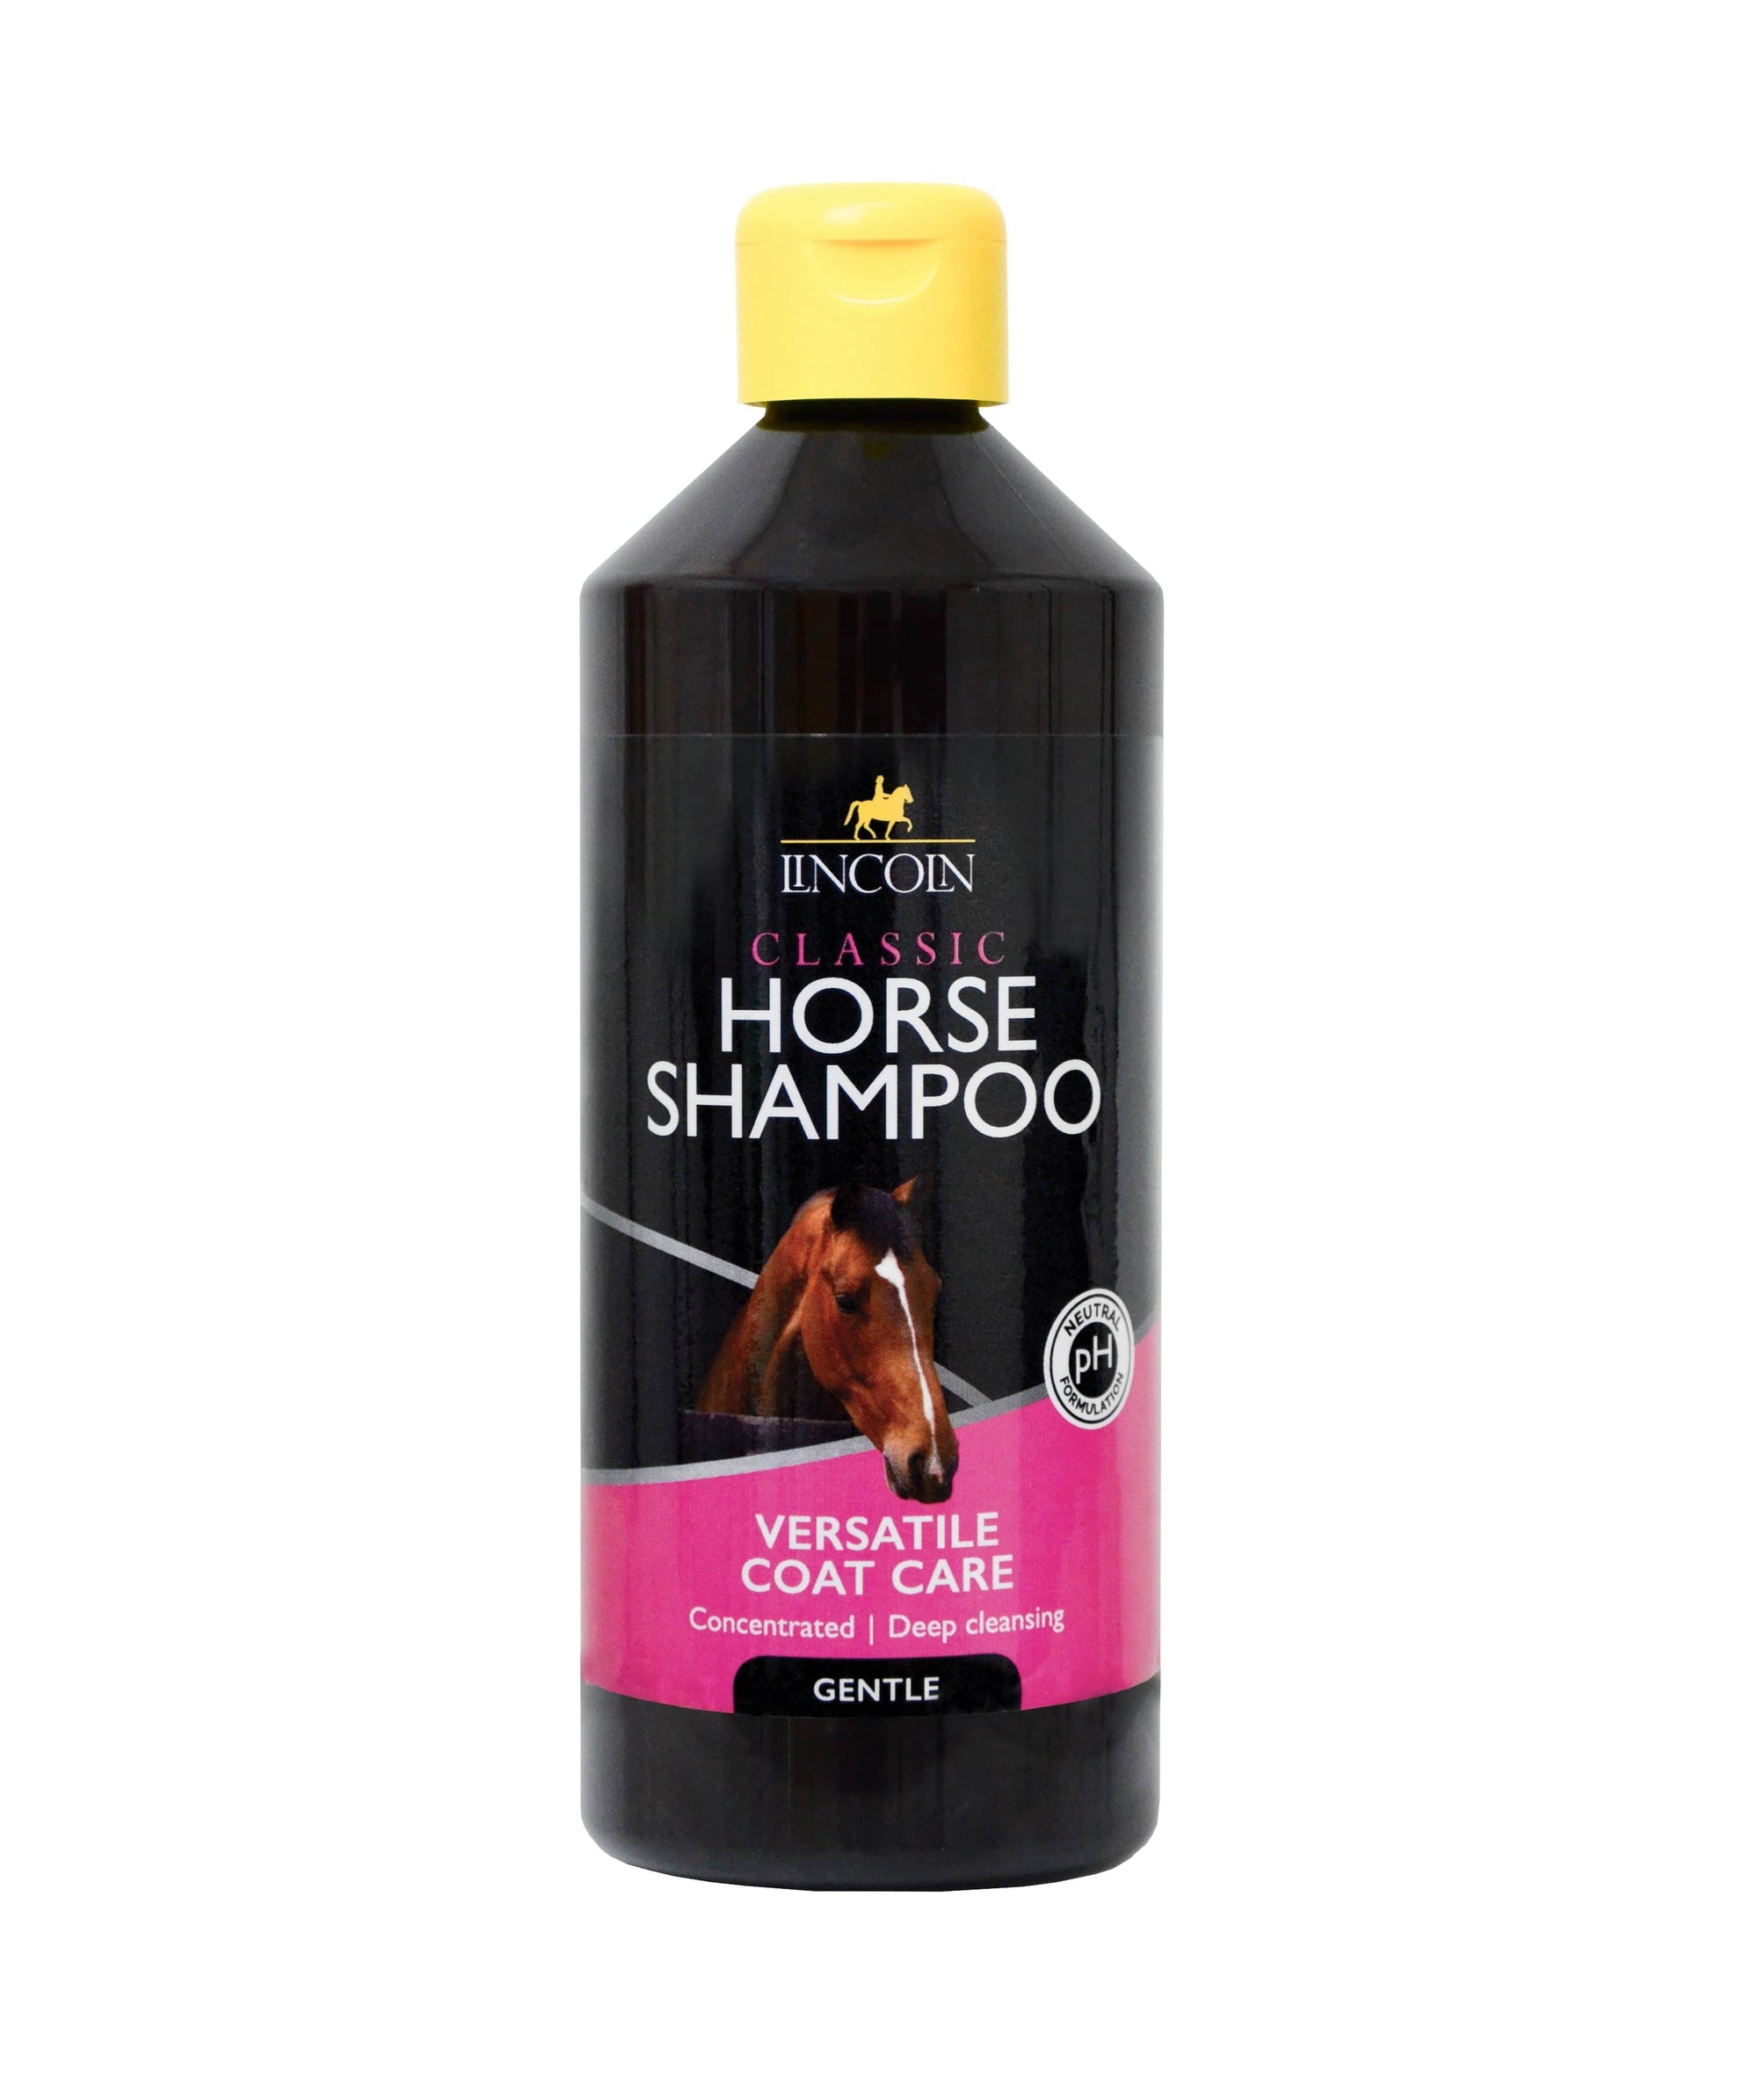 Lincoln classic horse shampoo